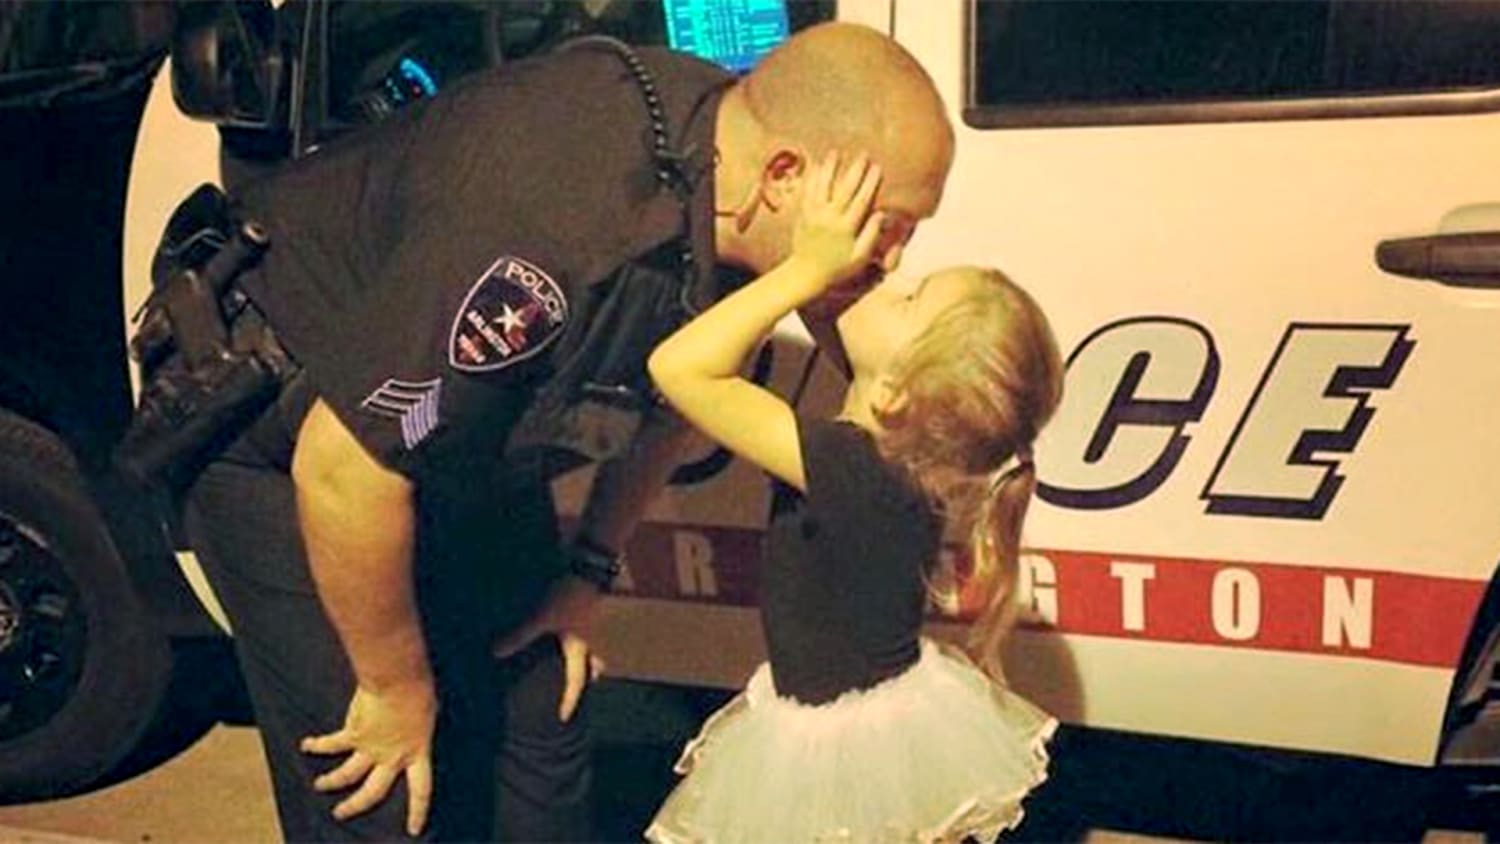 Arlington Police Department/FacebookPoliceman dad kisses ballerina daughter